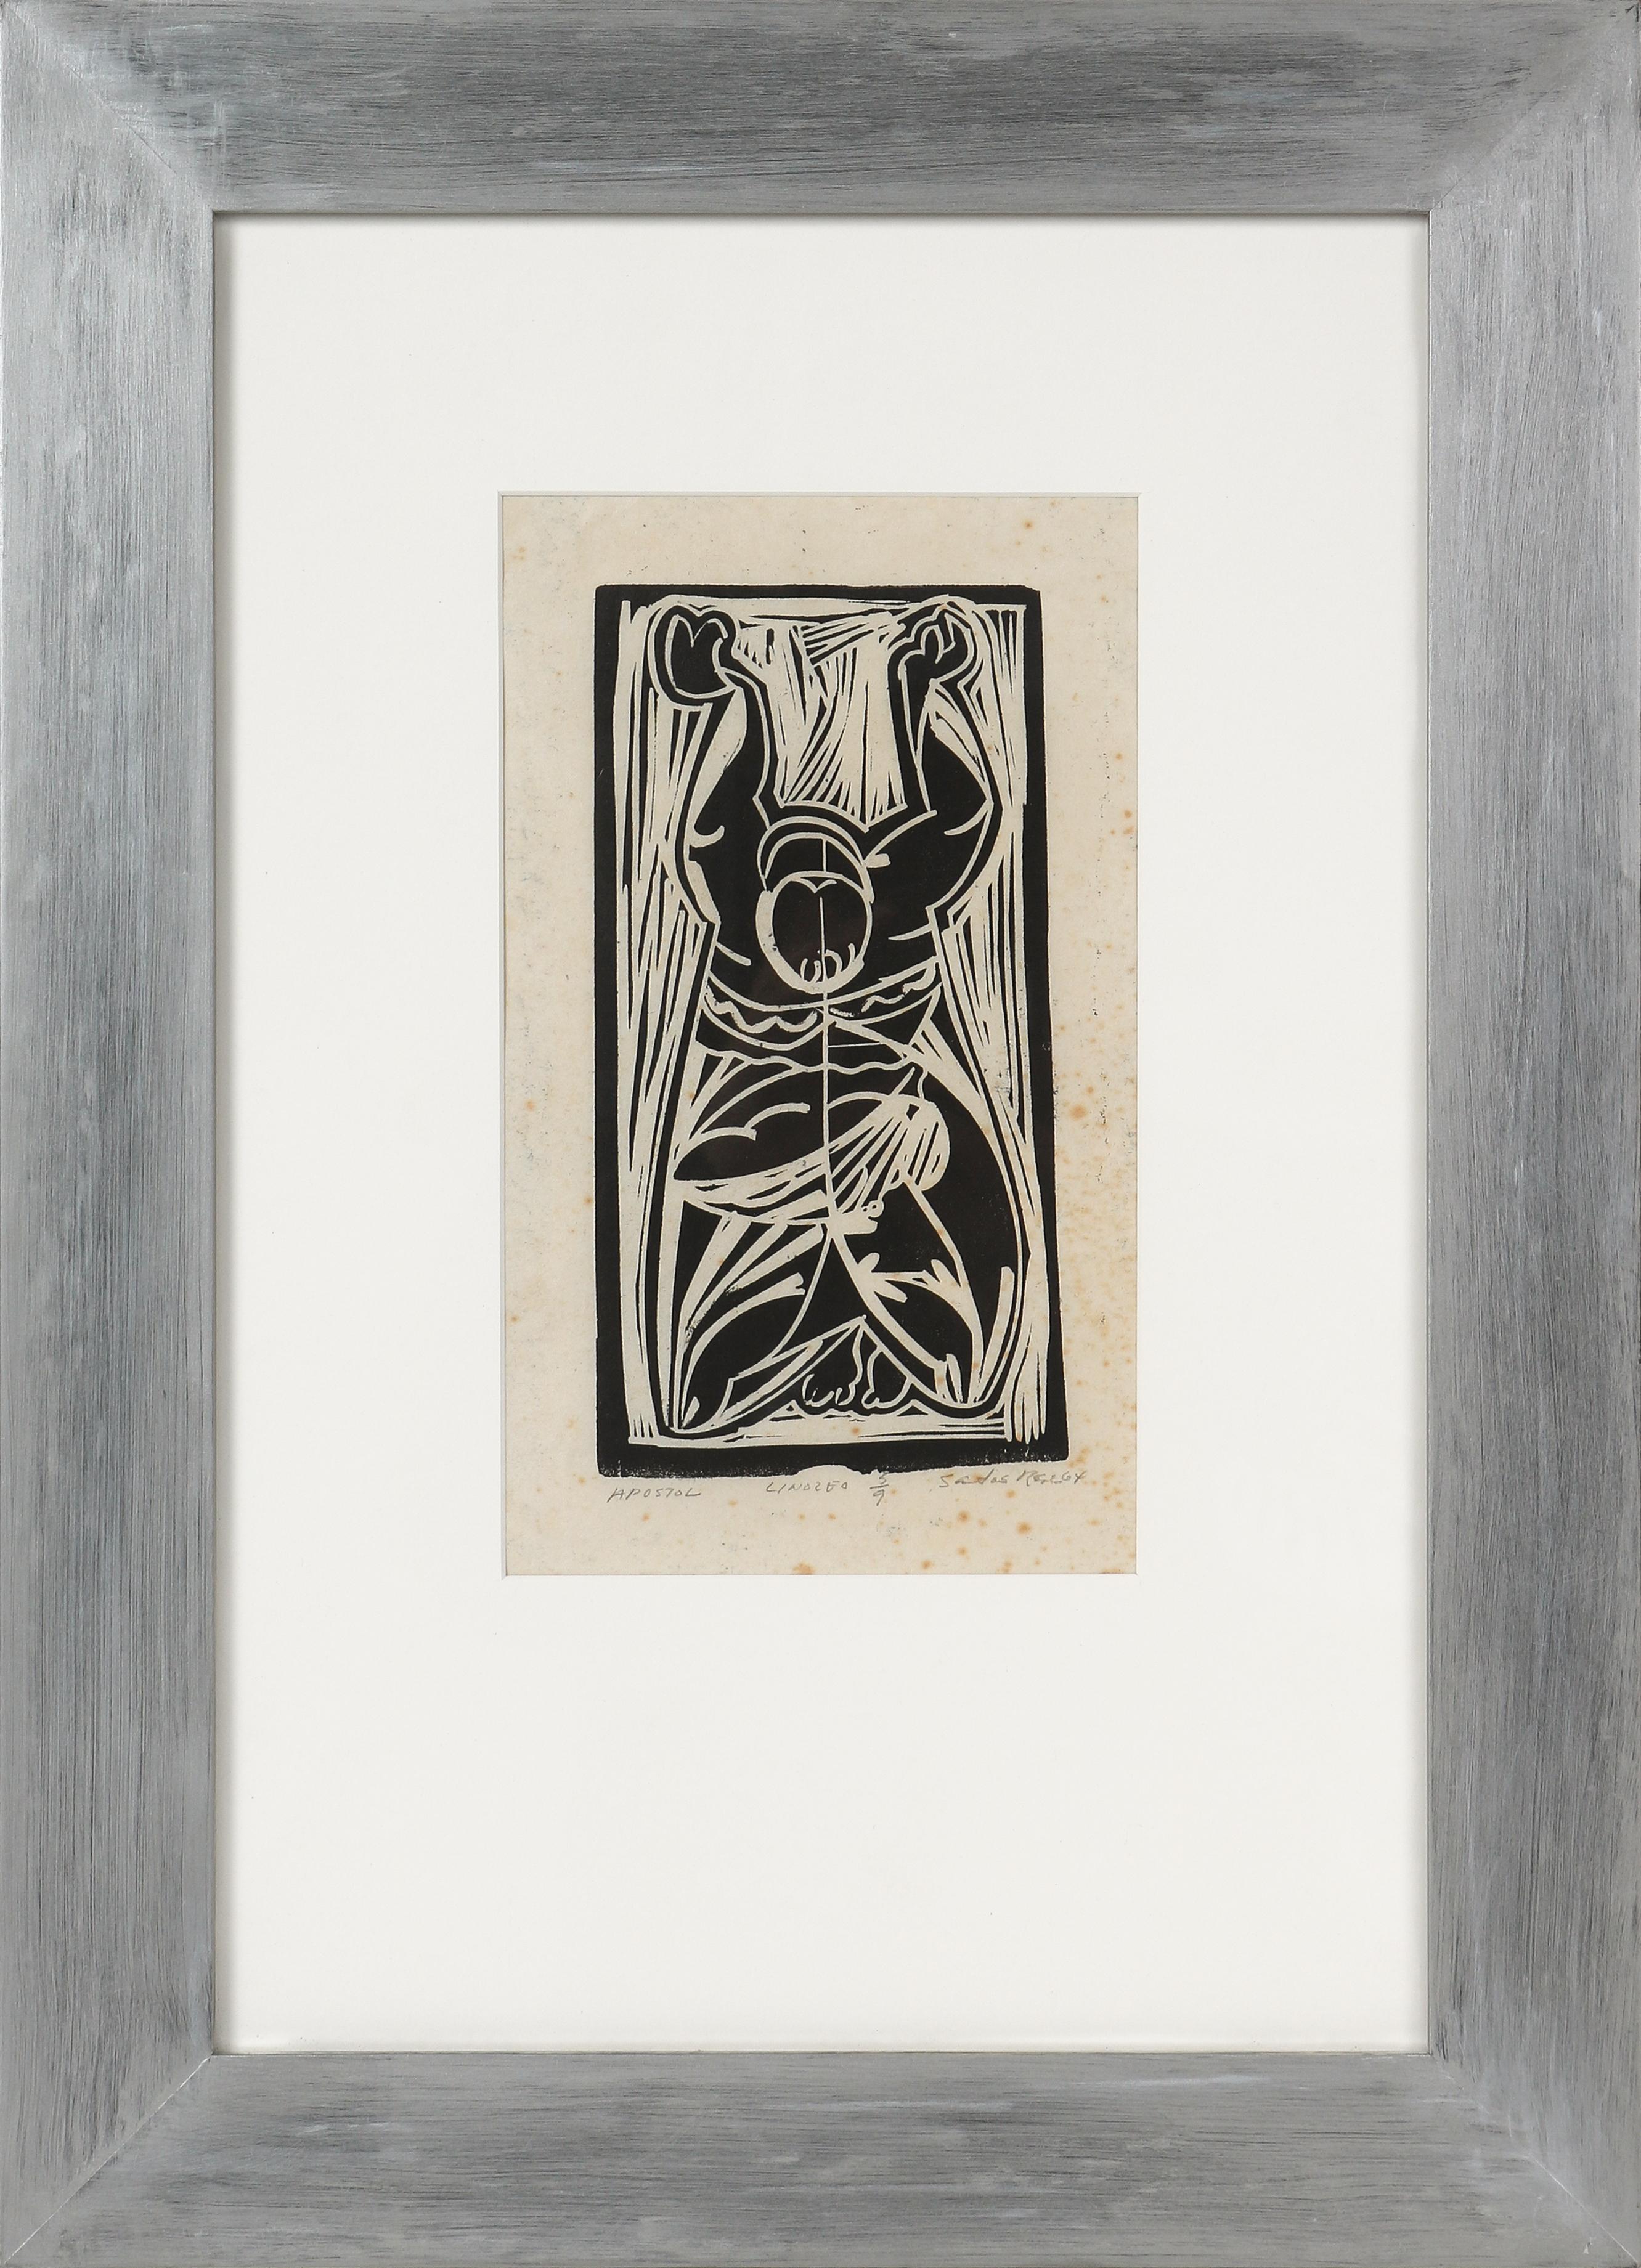 Santos Rene Irizarry Figurative Print - "Apostol" 1964 Linoleum Block Print